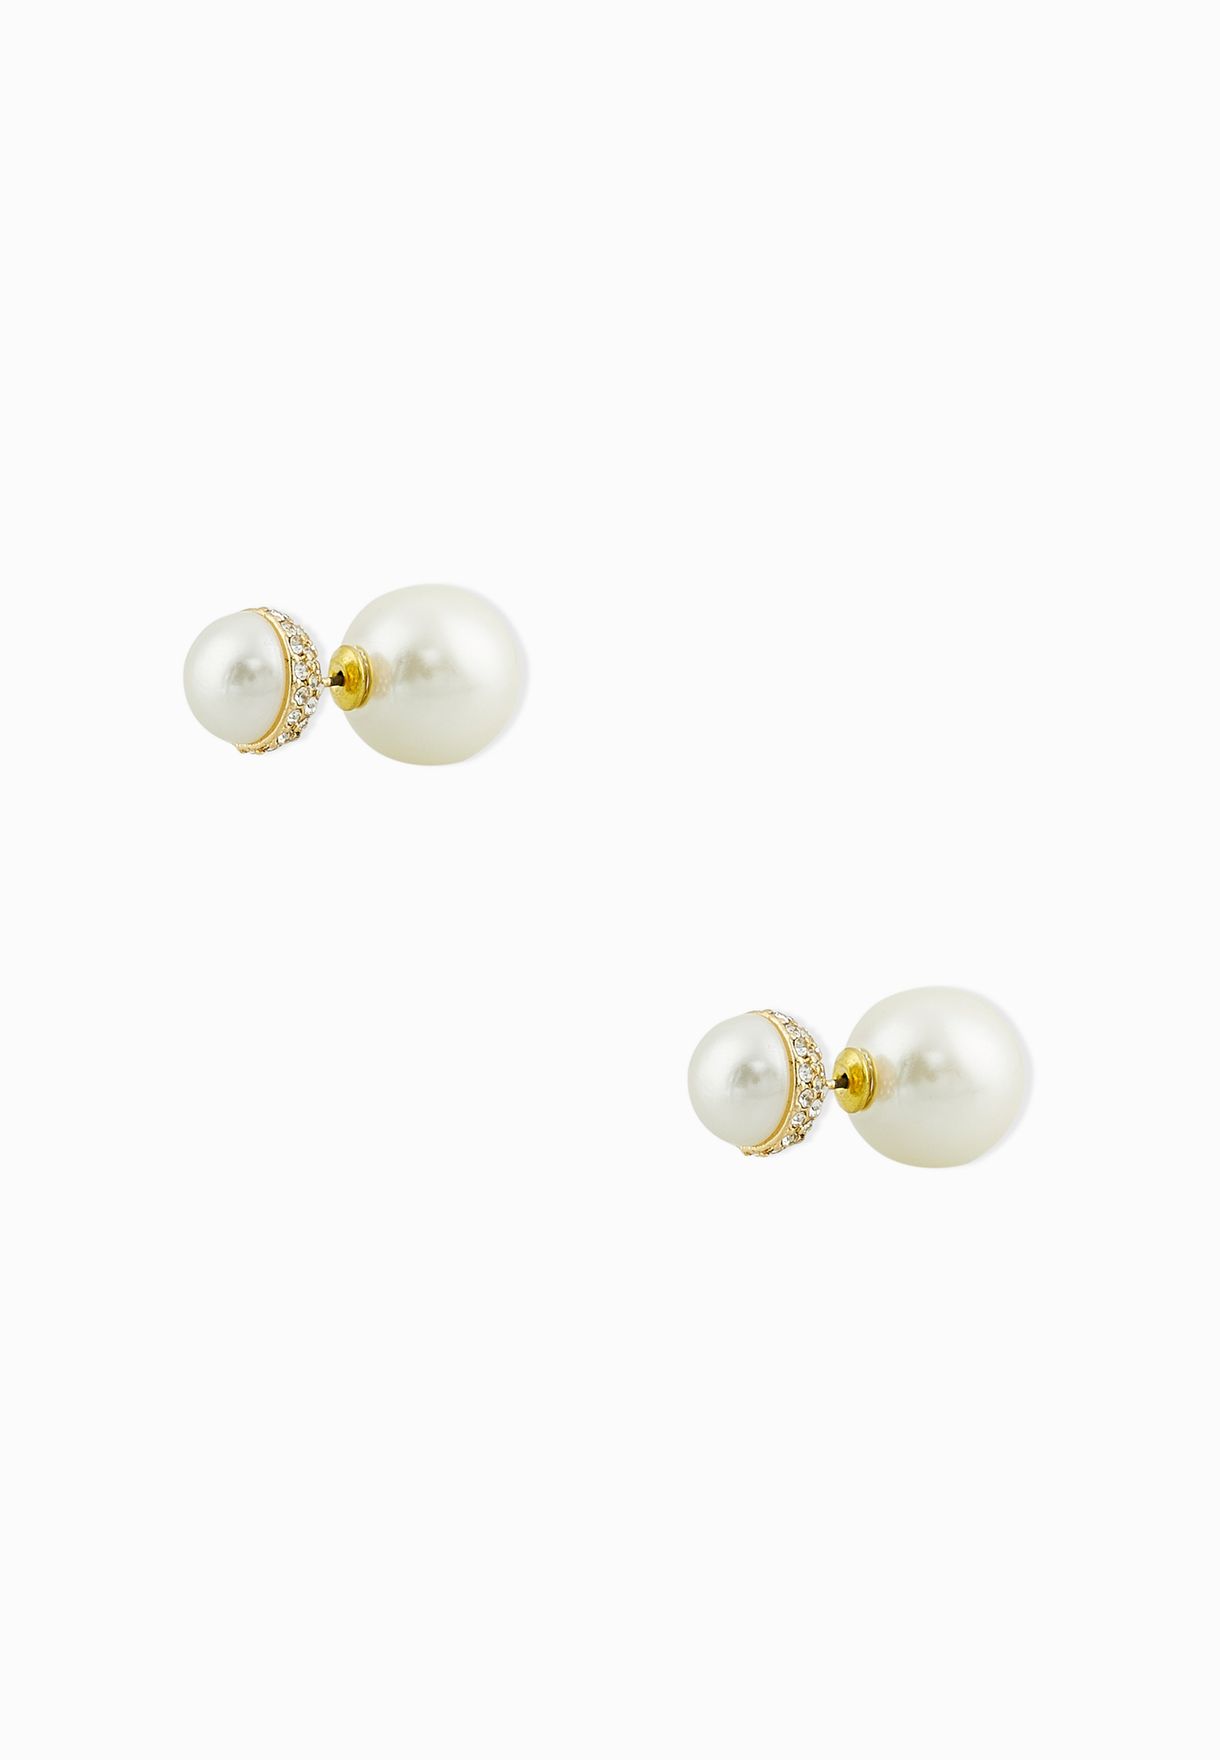 where to buy pearl earrings